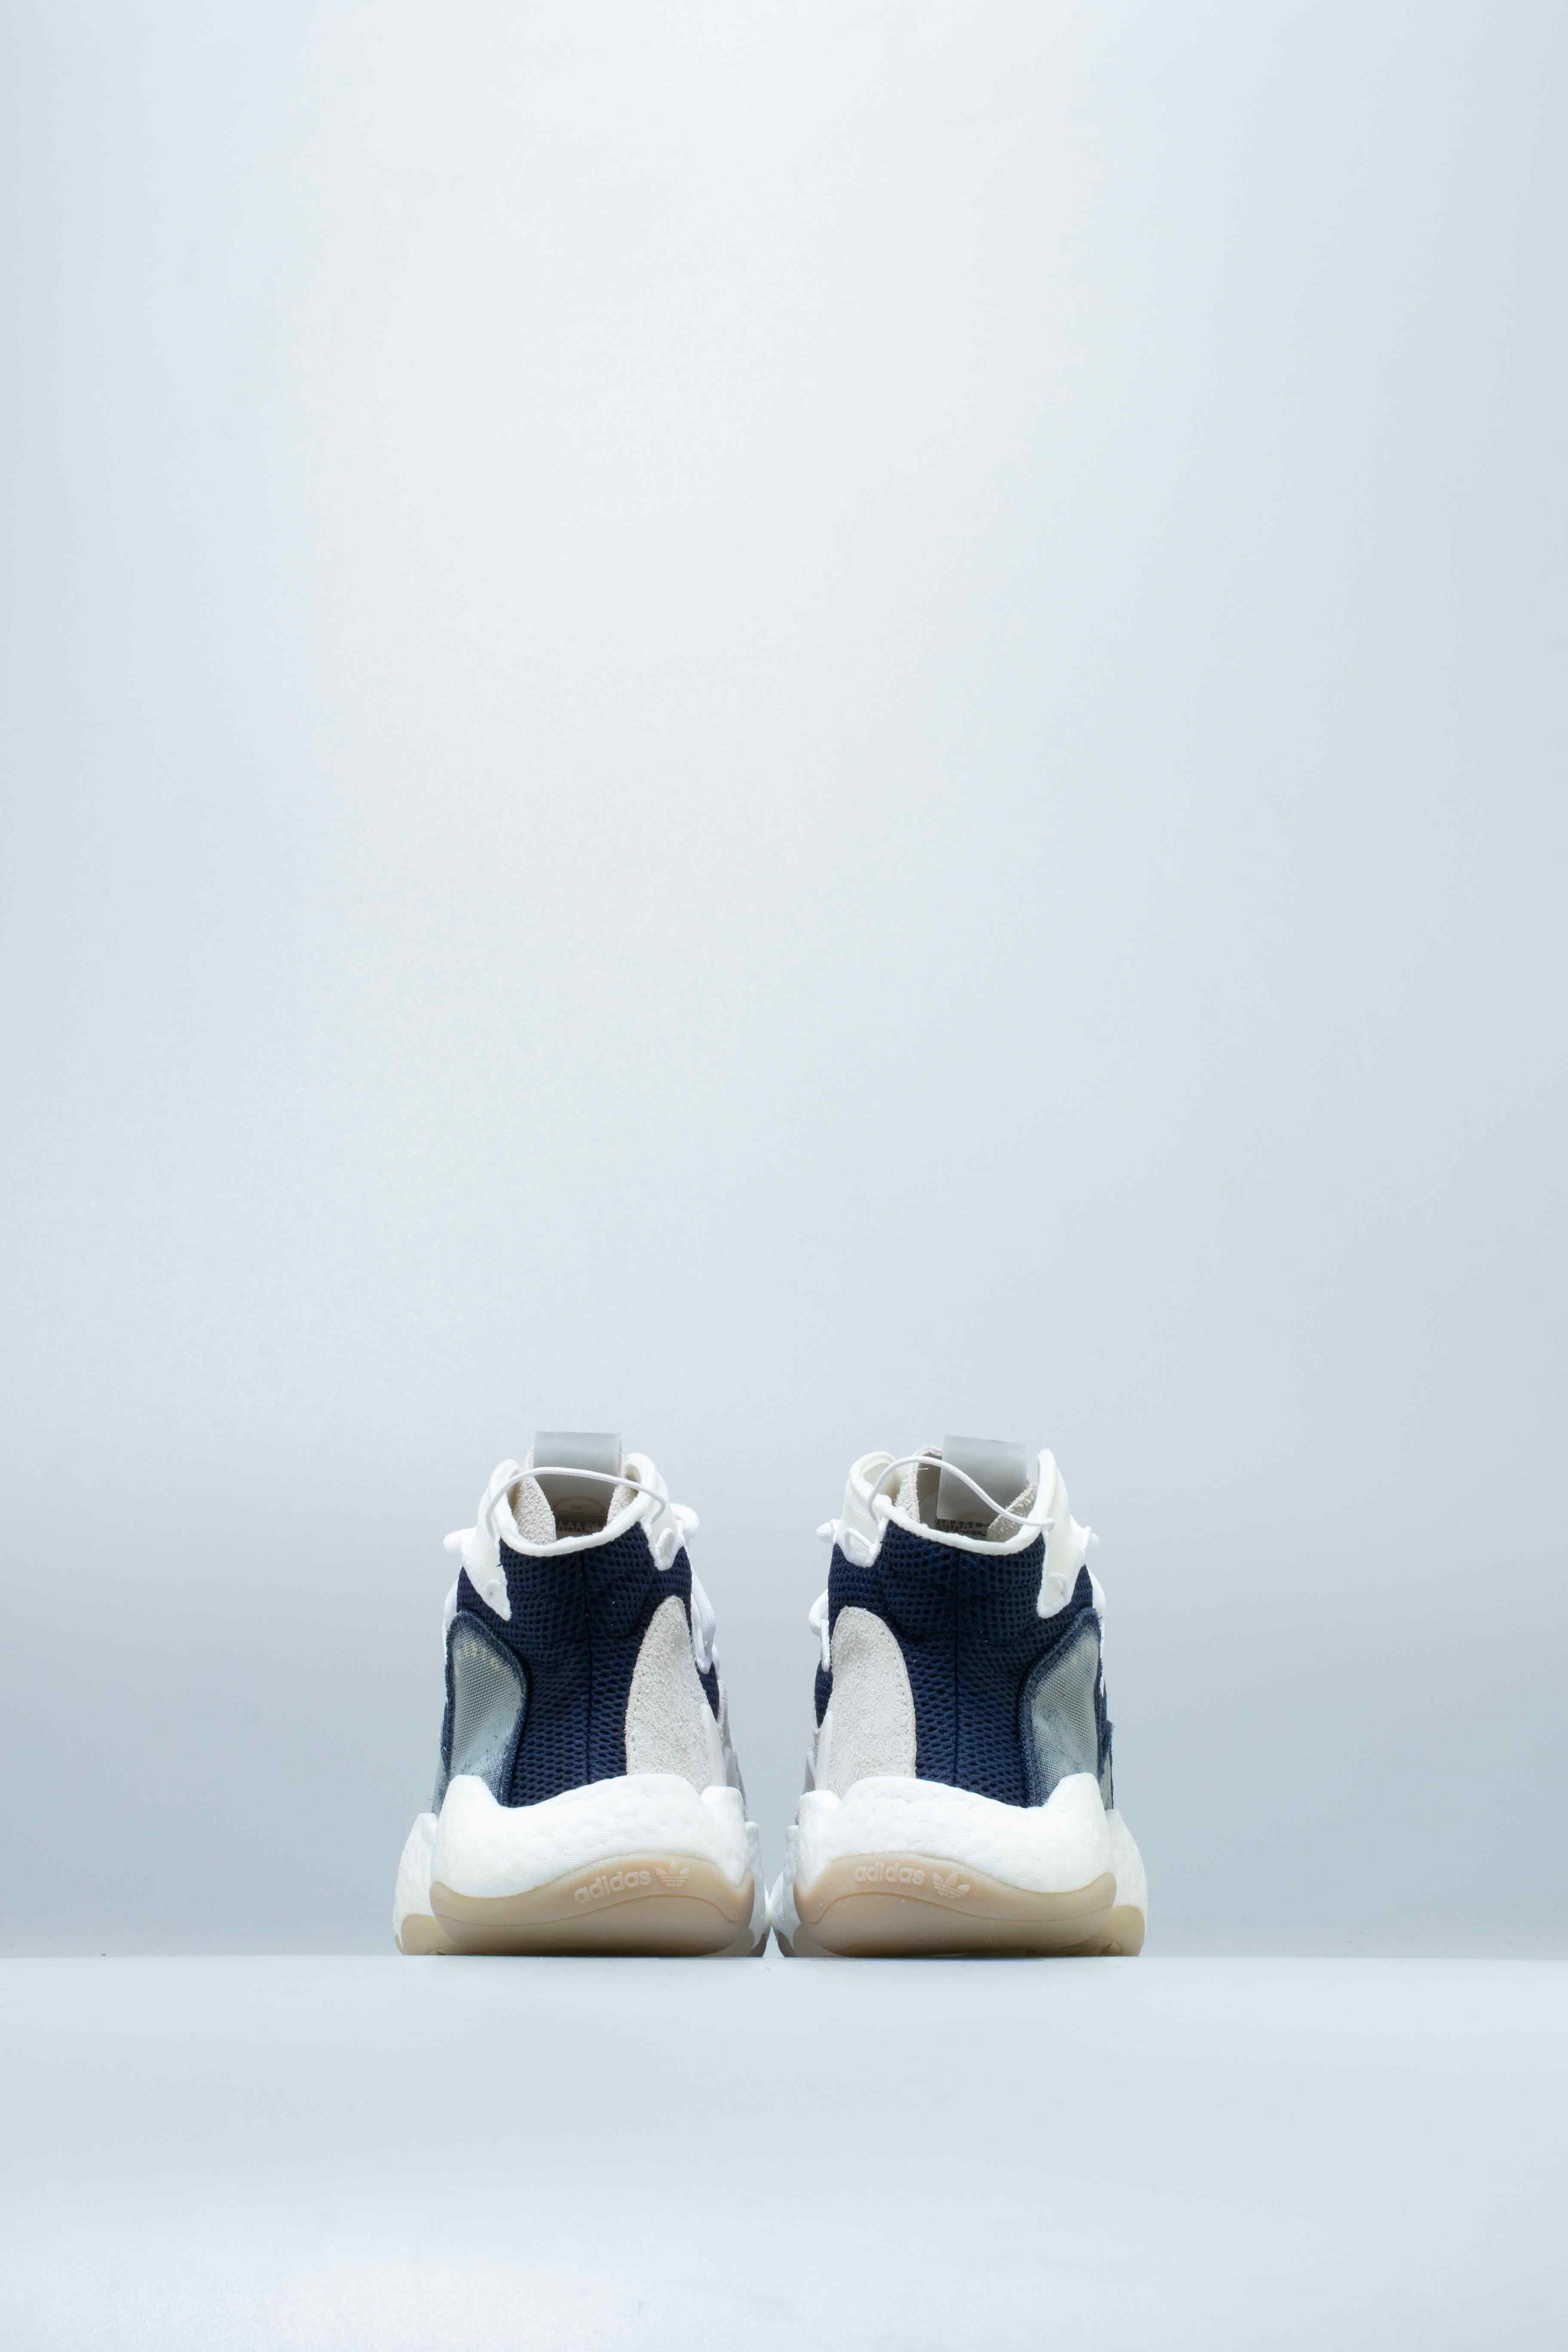 Adidas Consortium Crazy BYW Lvl 1 x Bristol Mens Shoe - Navy/Cloud White/Feather White